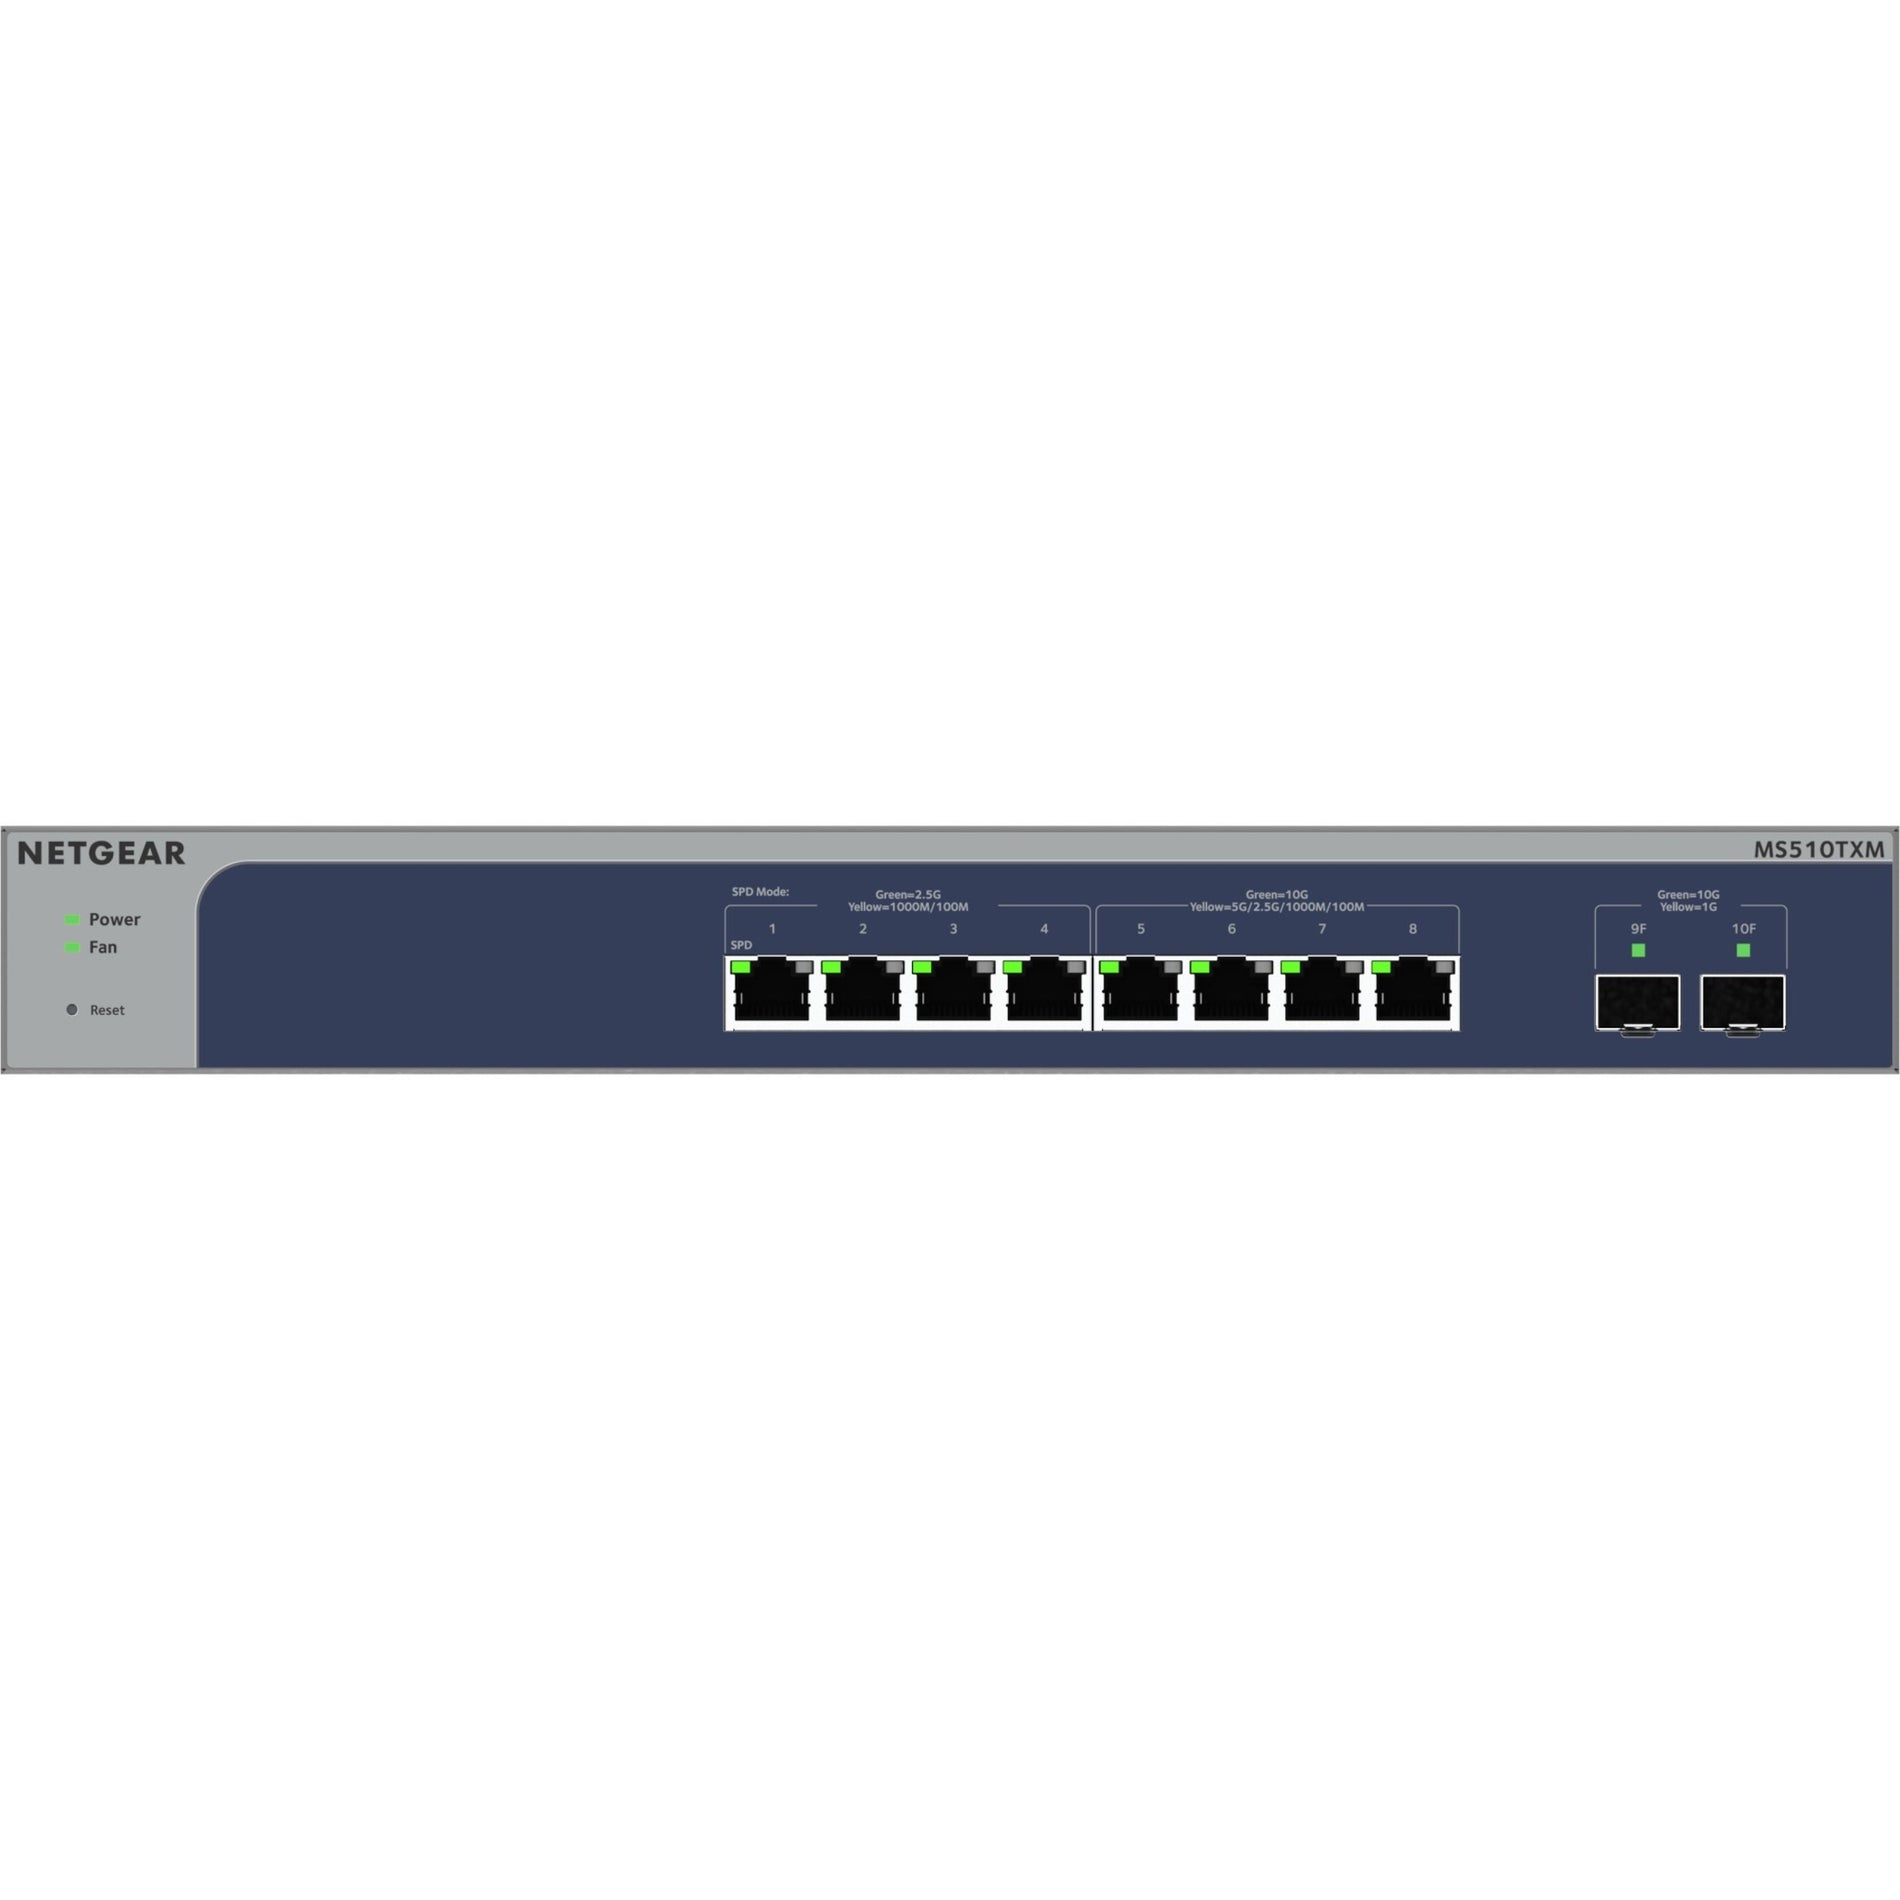 Netgear MS510TXM-100NAS MS510TXM Ethernet Switch, 8 Ports, 10GBase-X, 2.5 Gigabit Ethernet, Lifetime Warranty